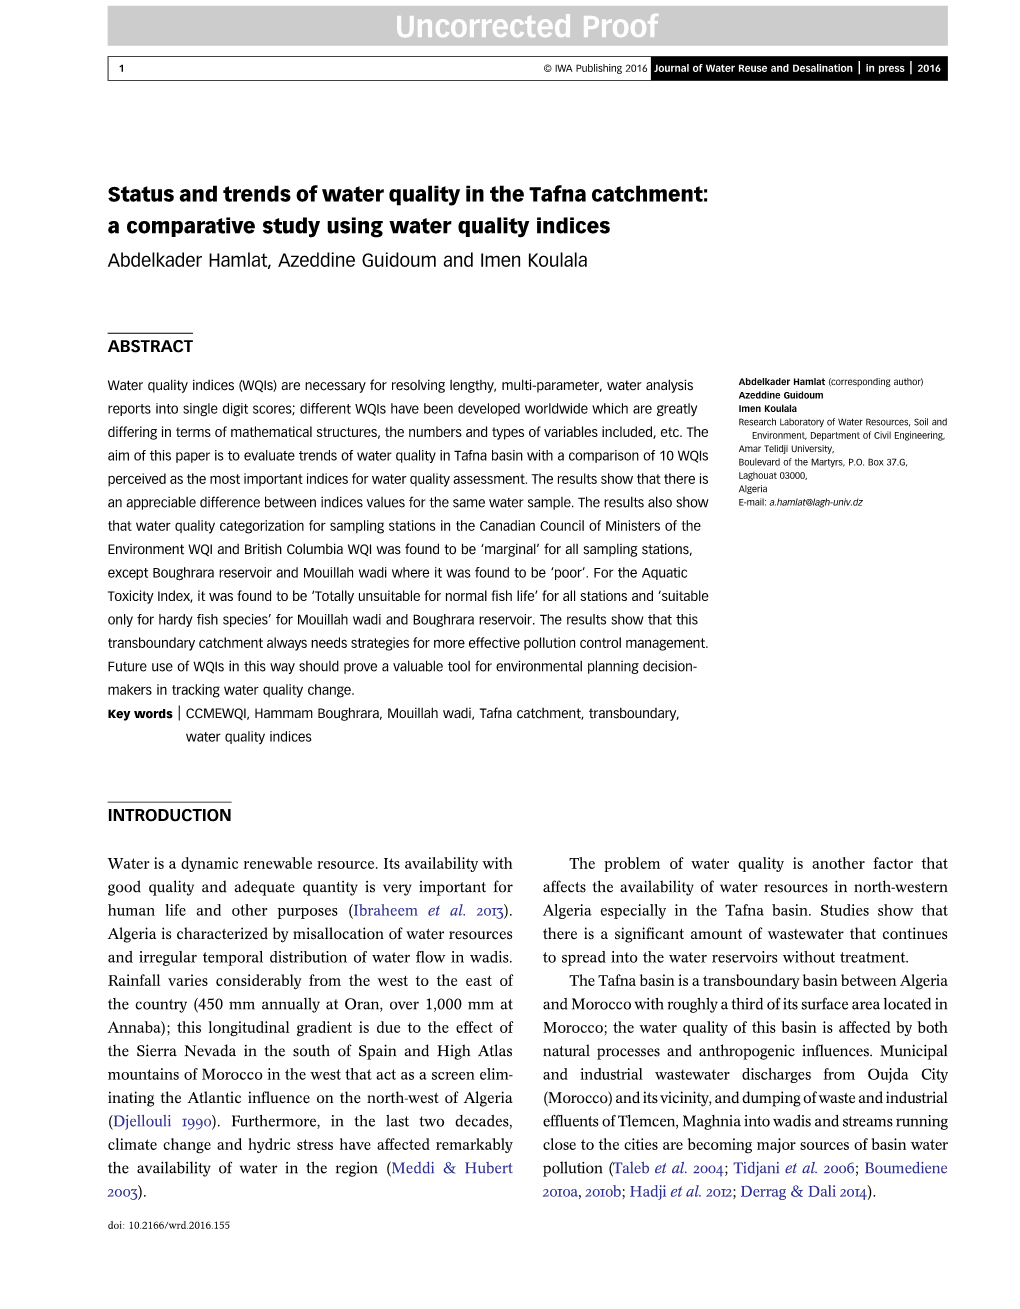 A Comparative Study Using Water Quality Indices Abdelkader Hamlat, Azeddine Guidoum and Imen Koulala